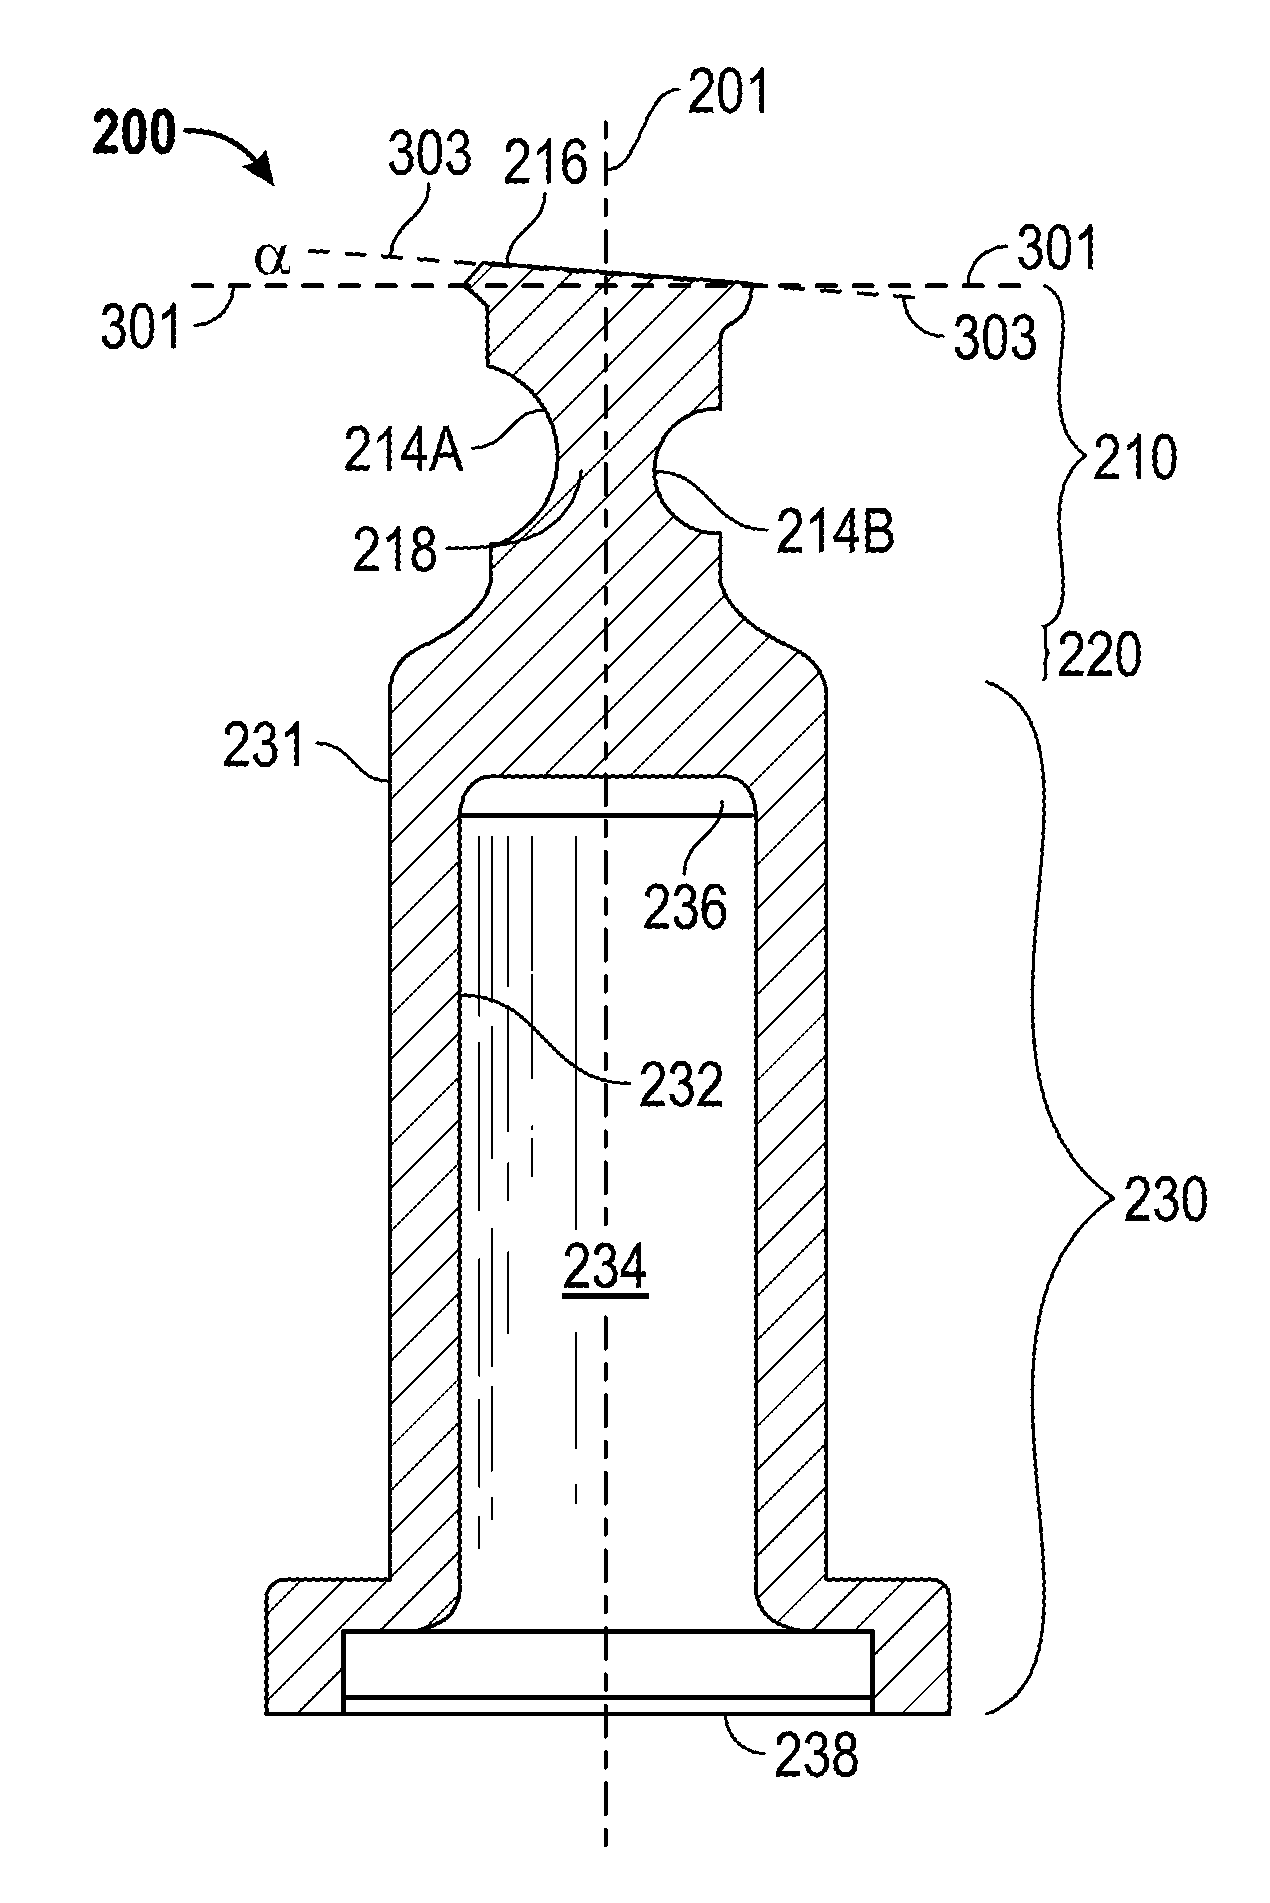 Needleless connector with flexible valve